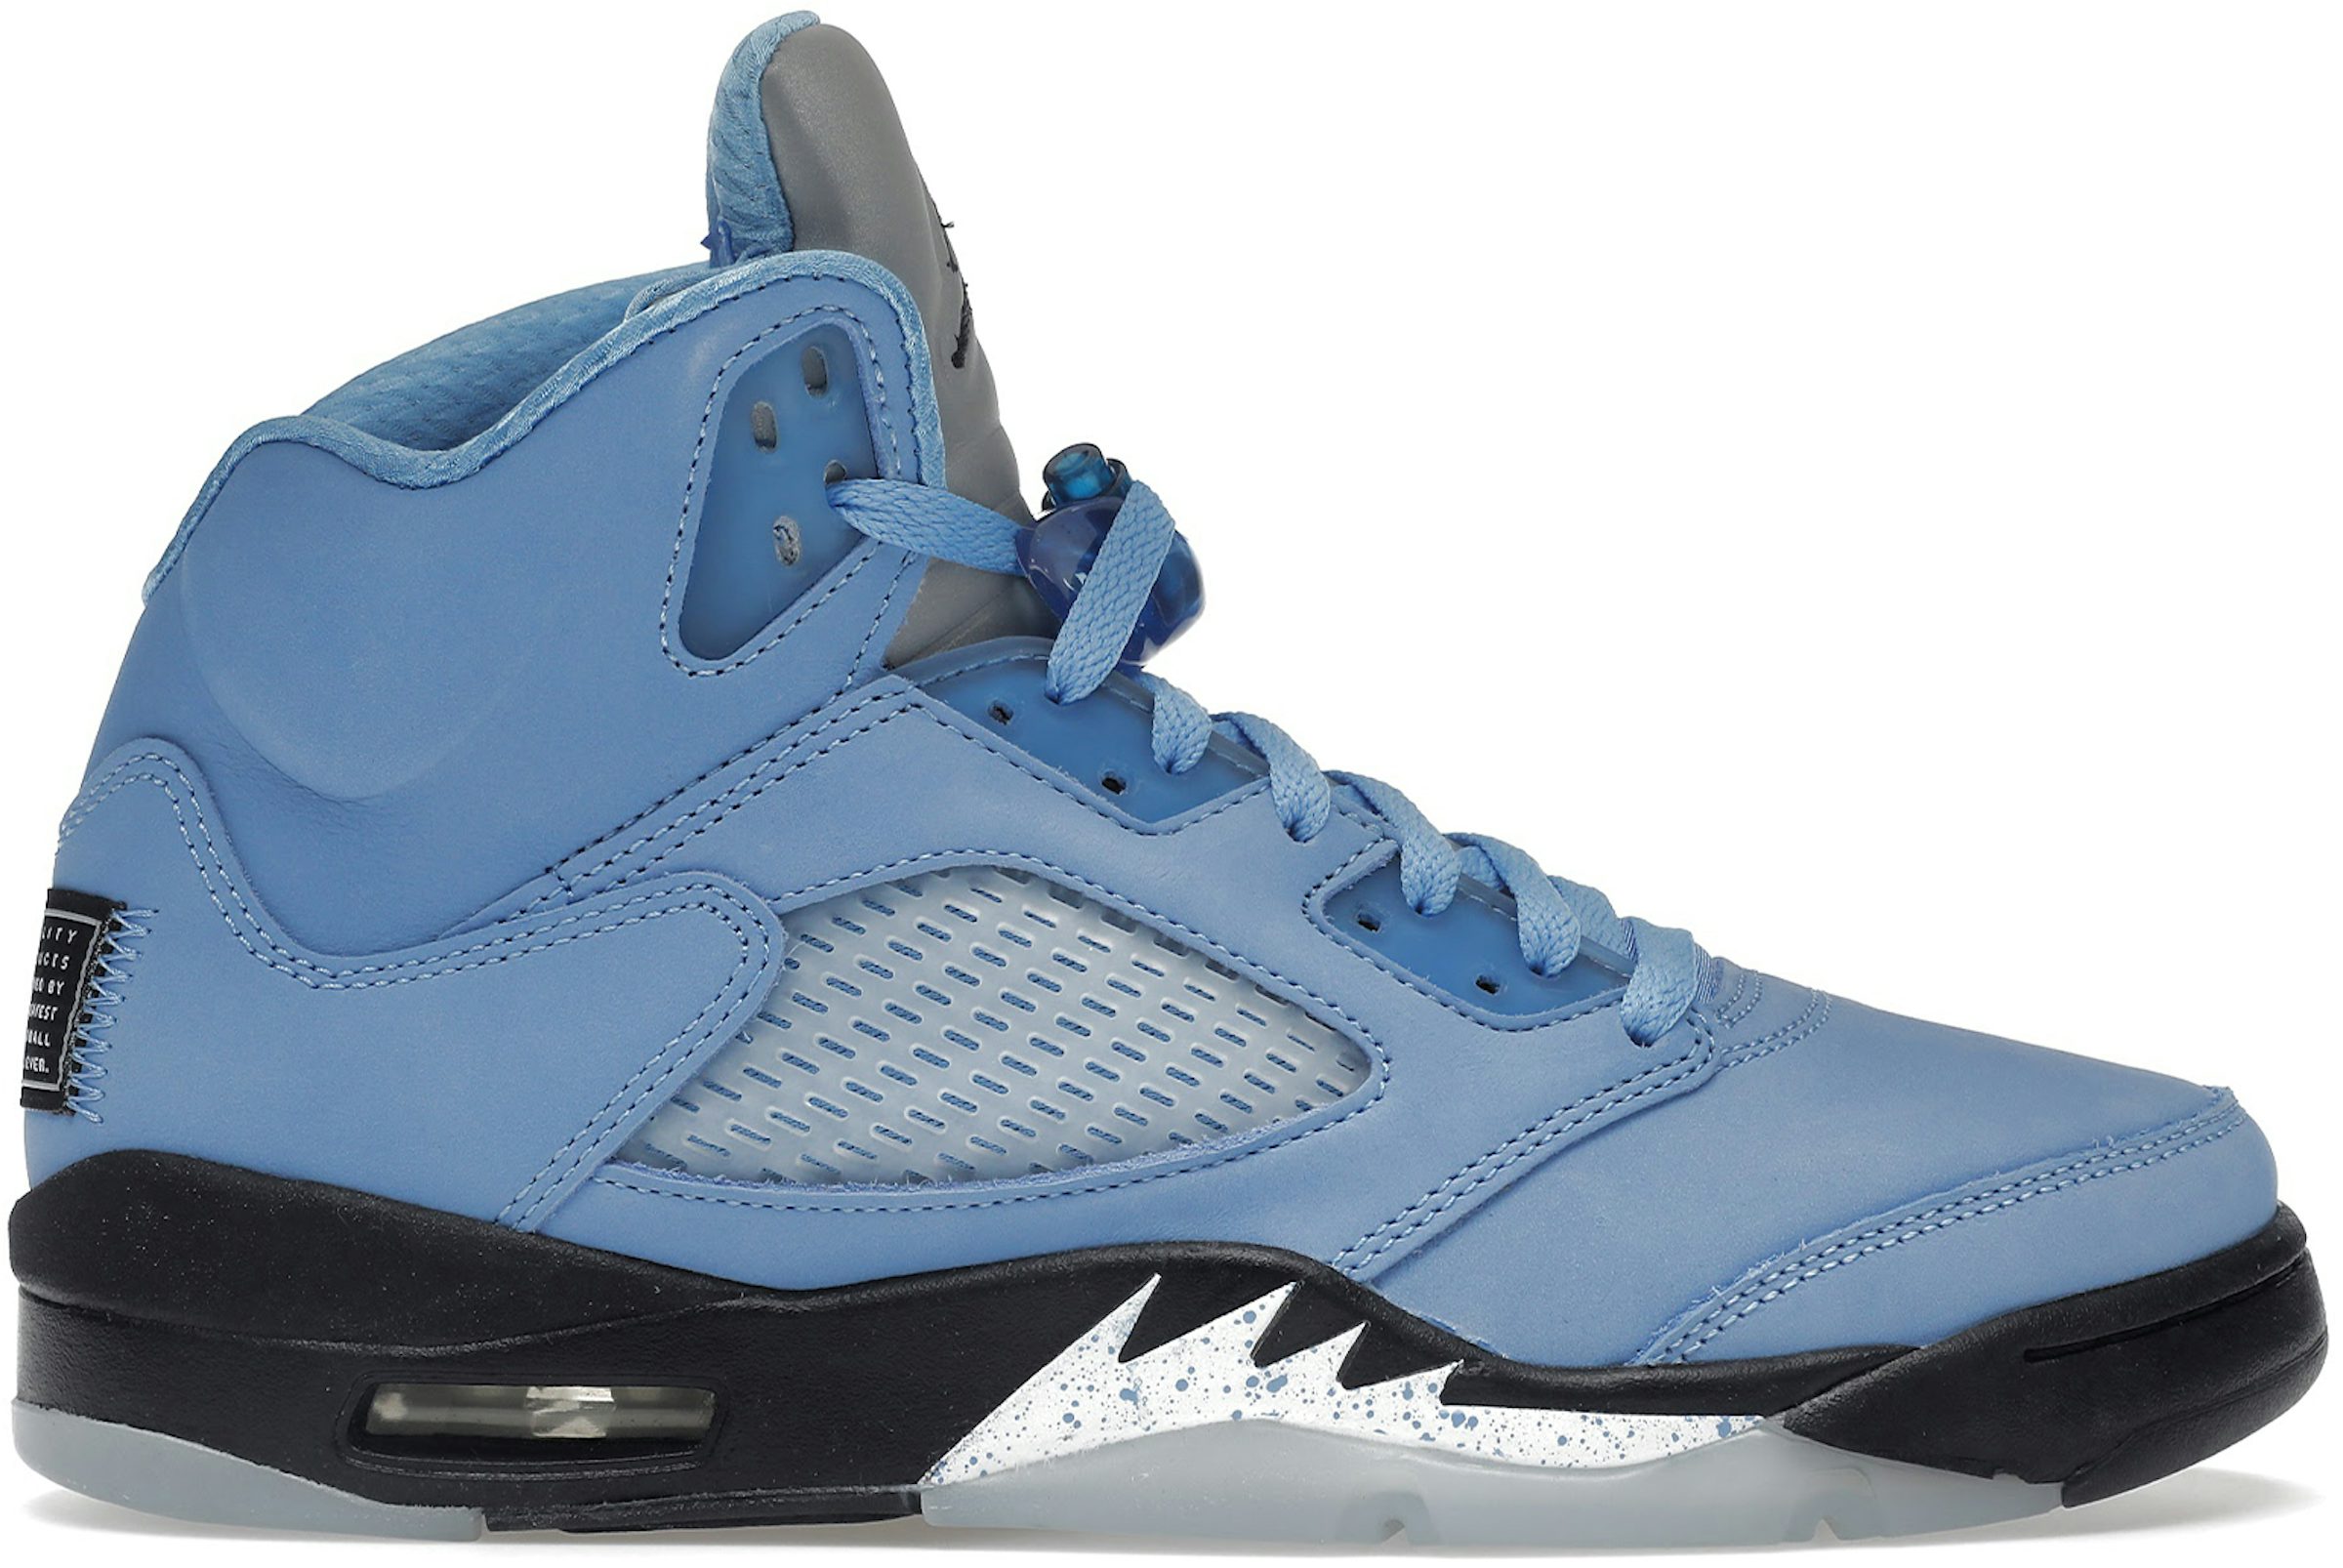 Air Jordan Retro 5 Limited Edition Mitch Match Shoe - Men's